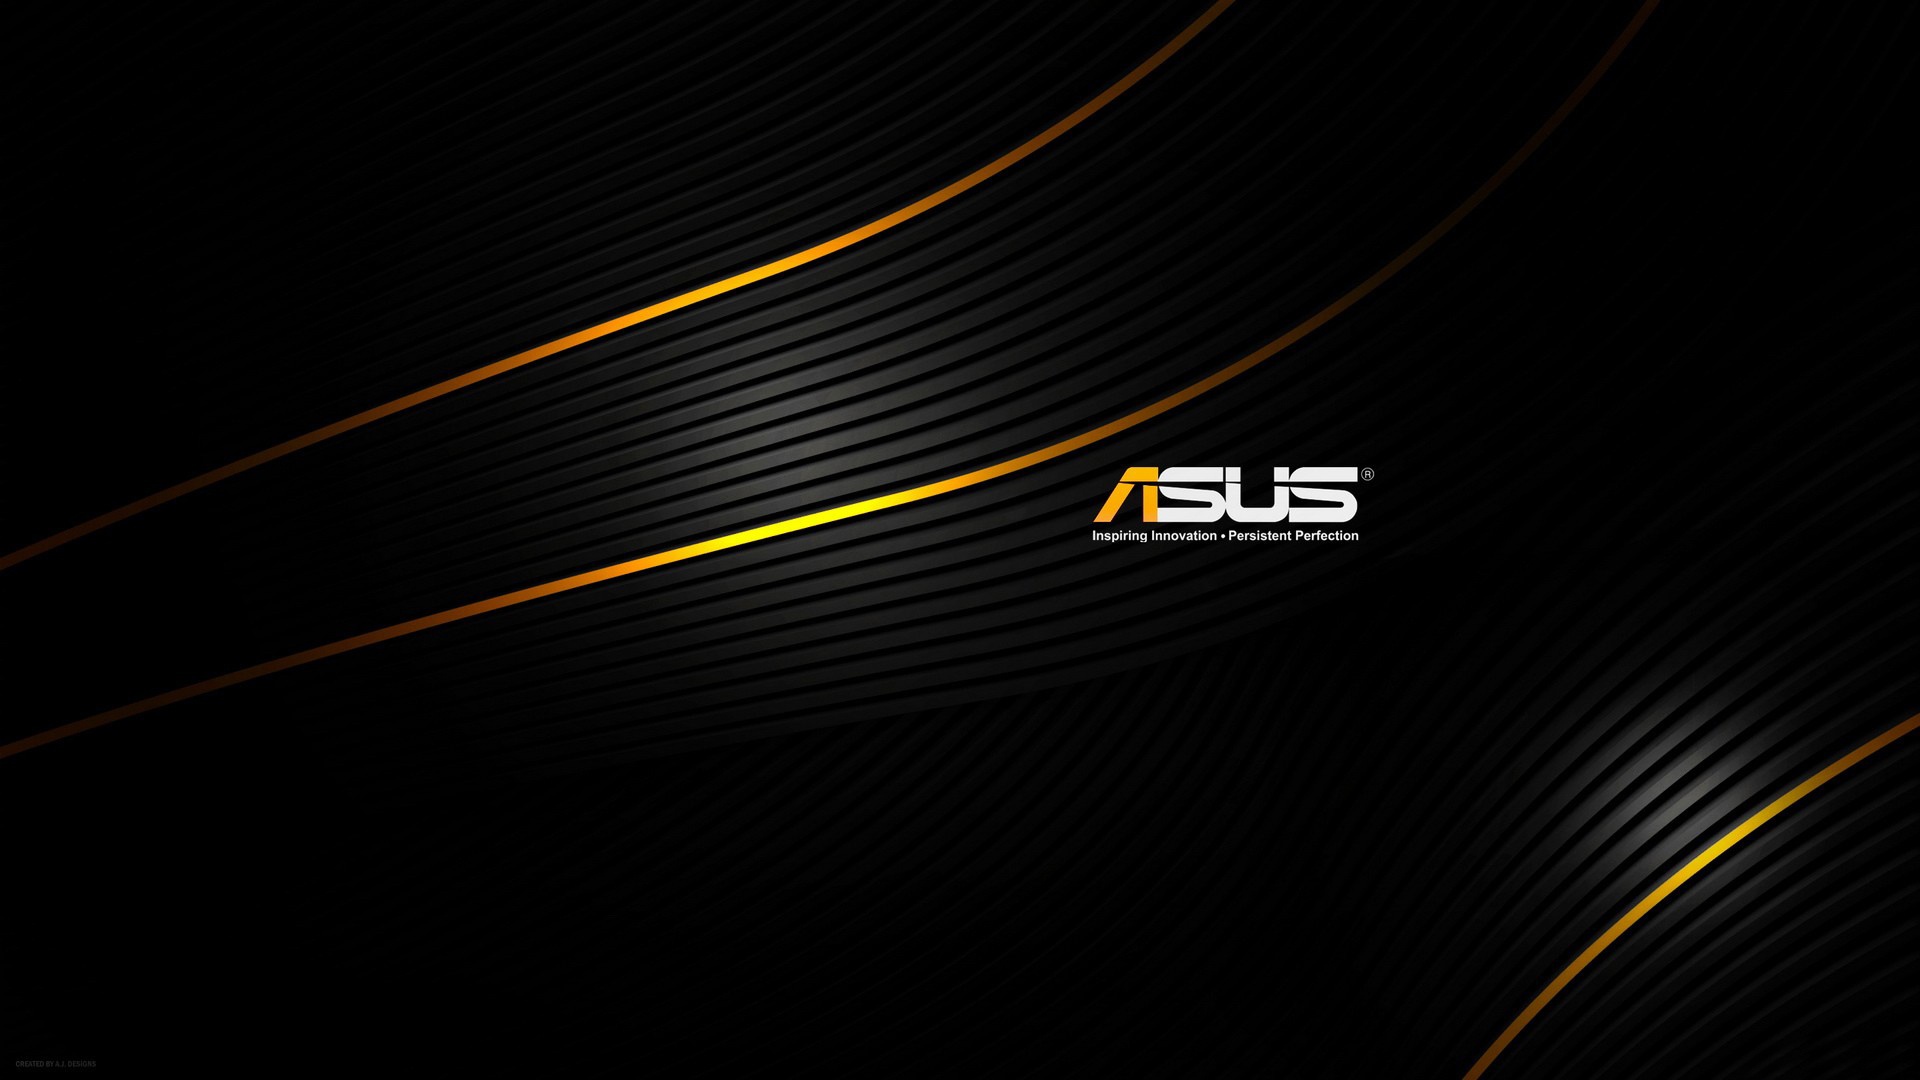 Asus Black Background 1920 x 1080 Download Close